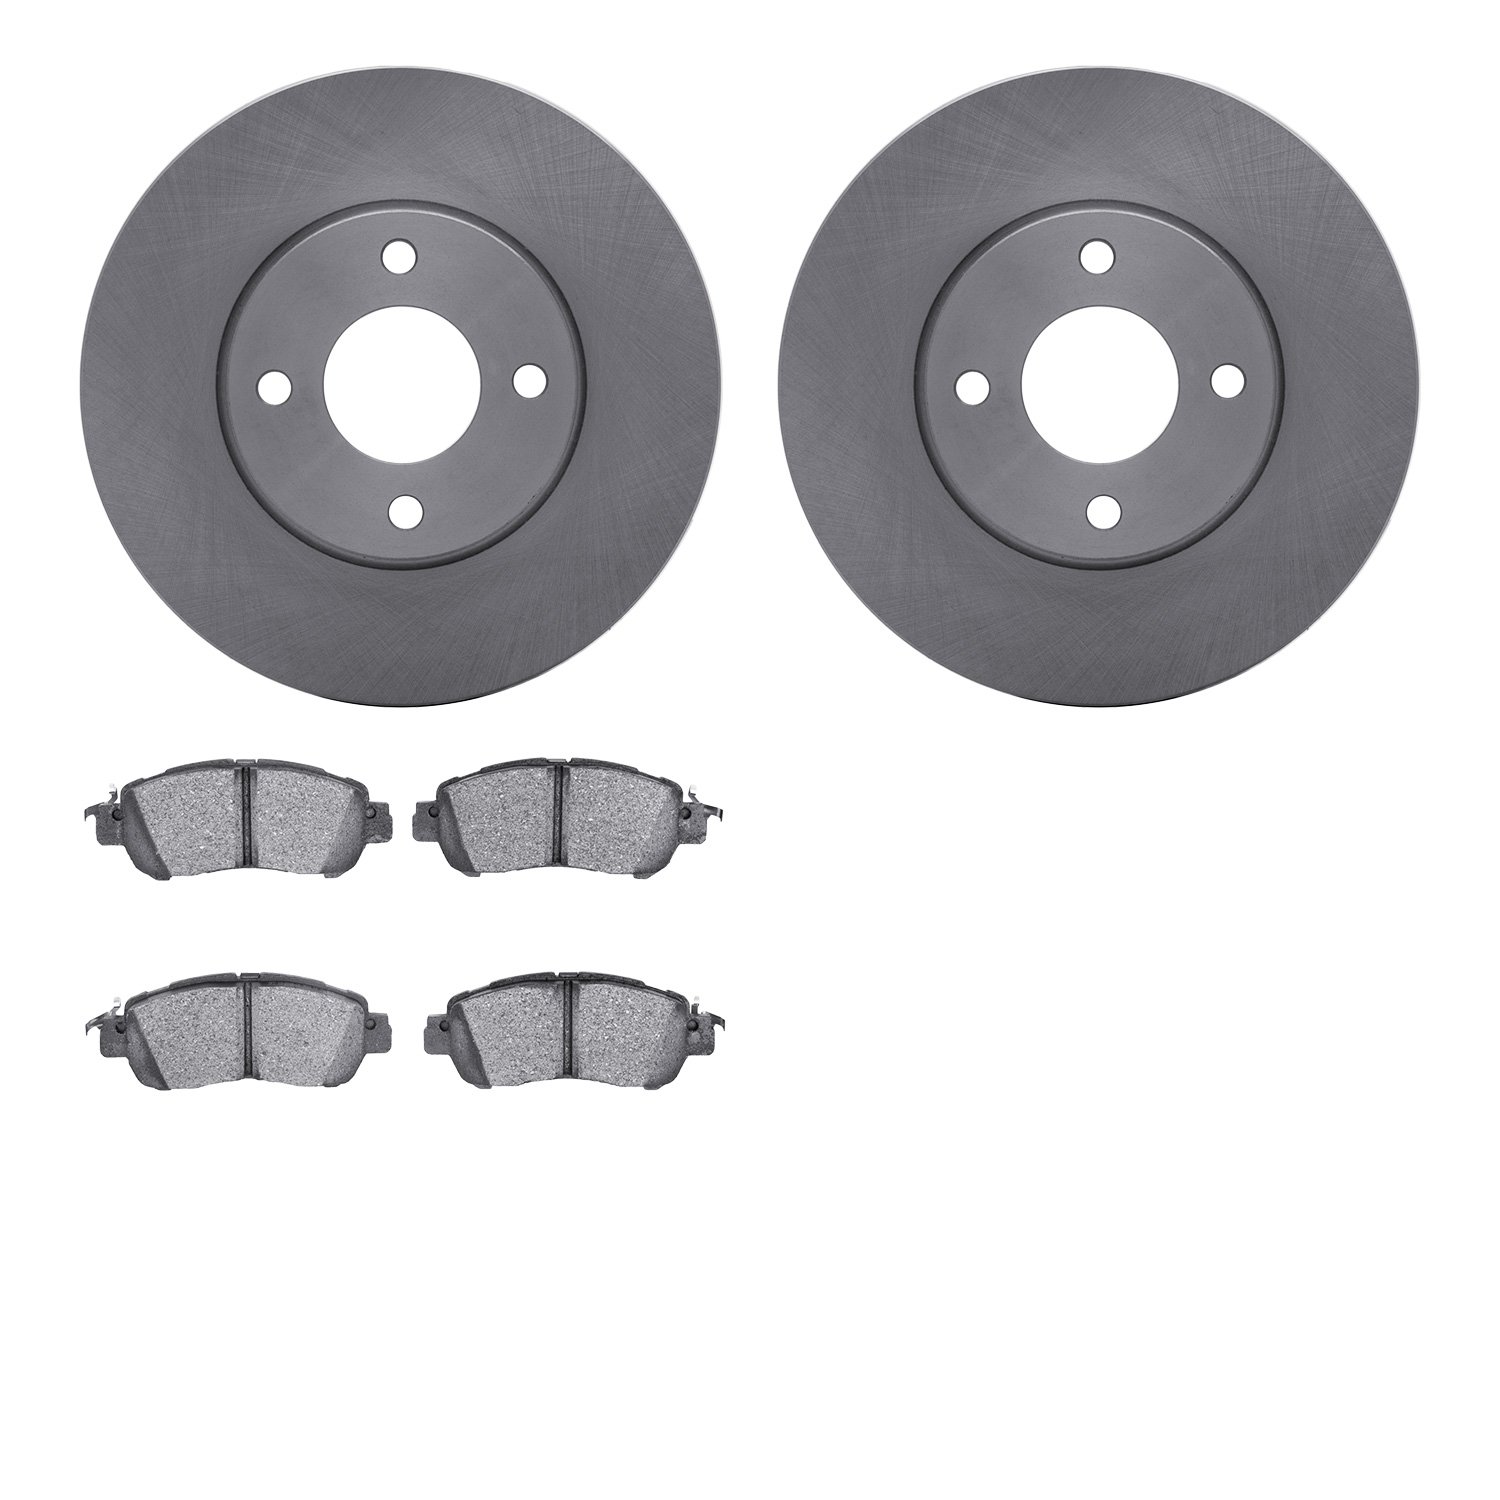 6302-67132 Brake Rotors with 3000-Series Ceramic Brake Pads Kit, Fits Select Infiniti/Nissan, Position: Front